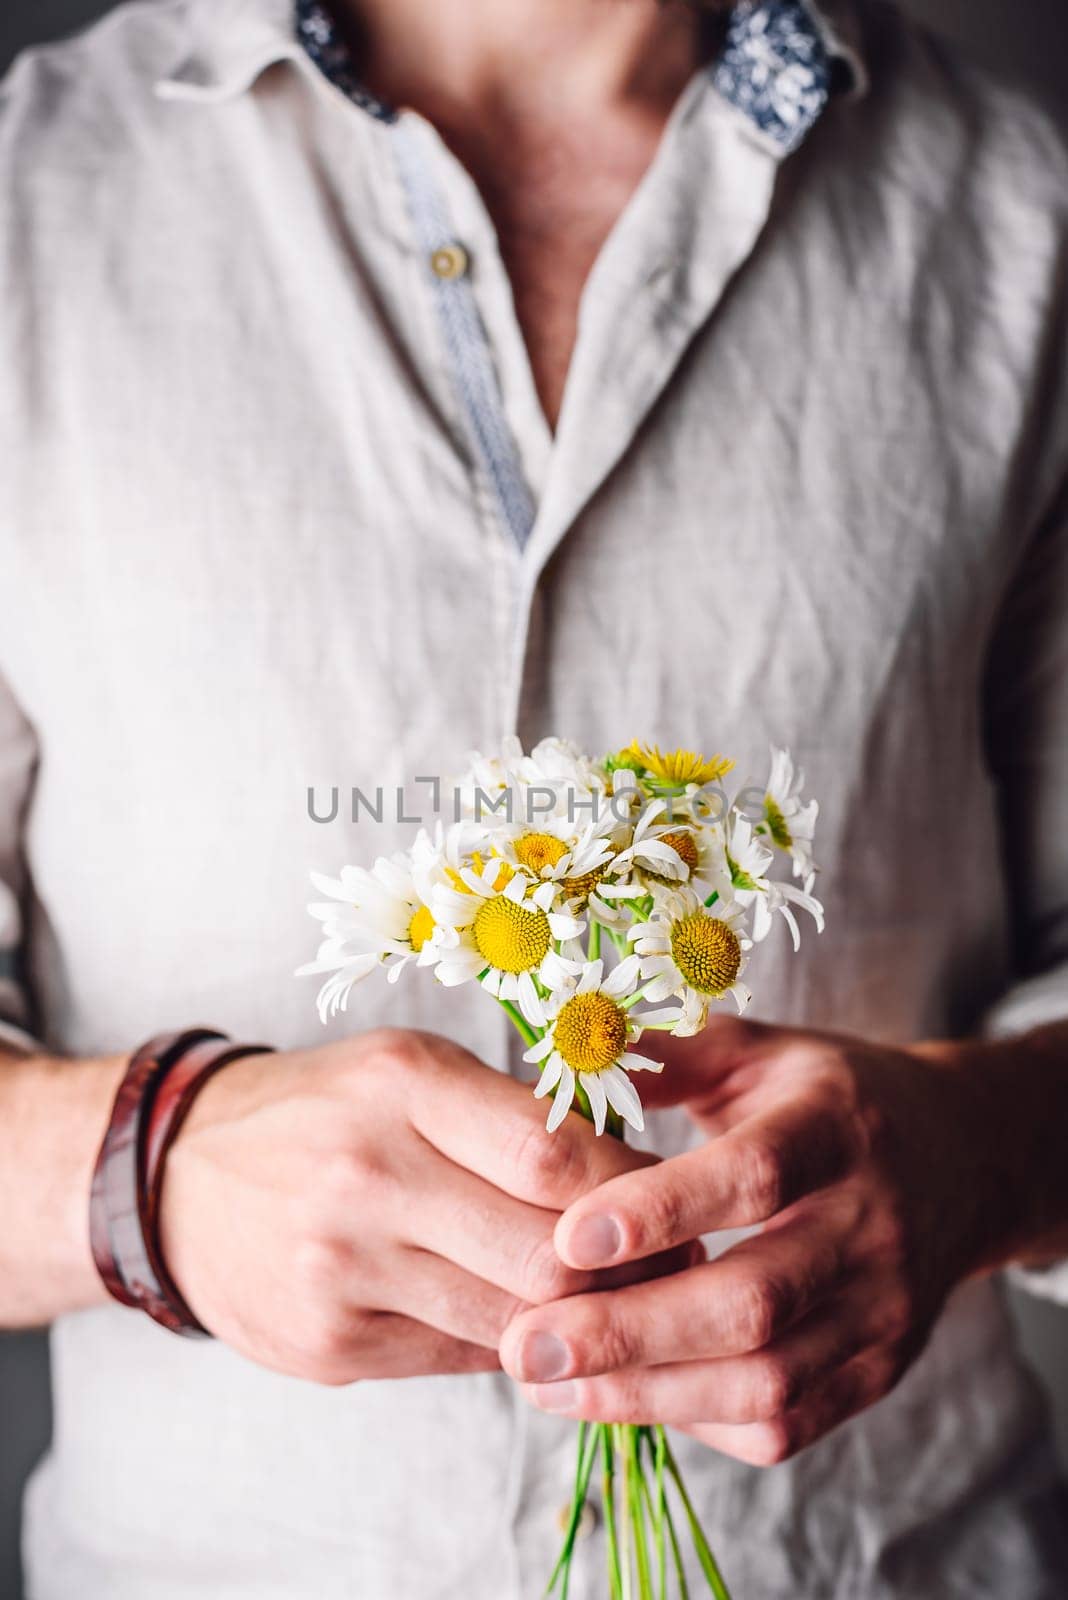 Man in Linen Shirt Holding Freshly Picked Chamomile Flowers in Hands by Seva_blsv